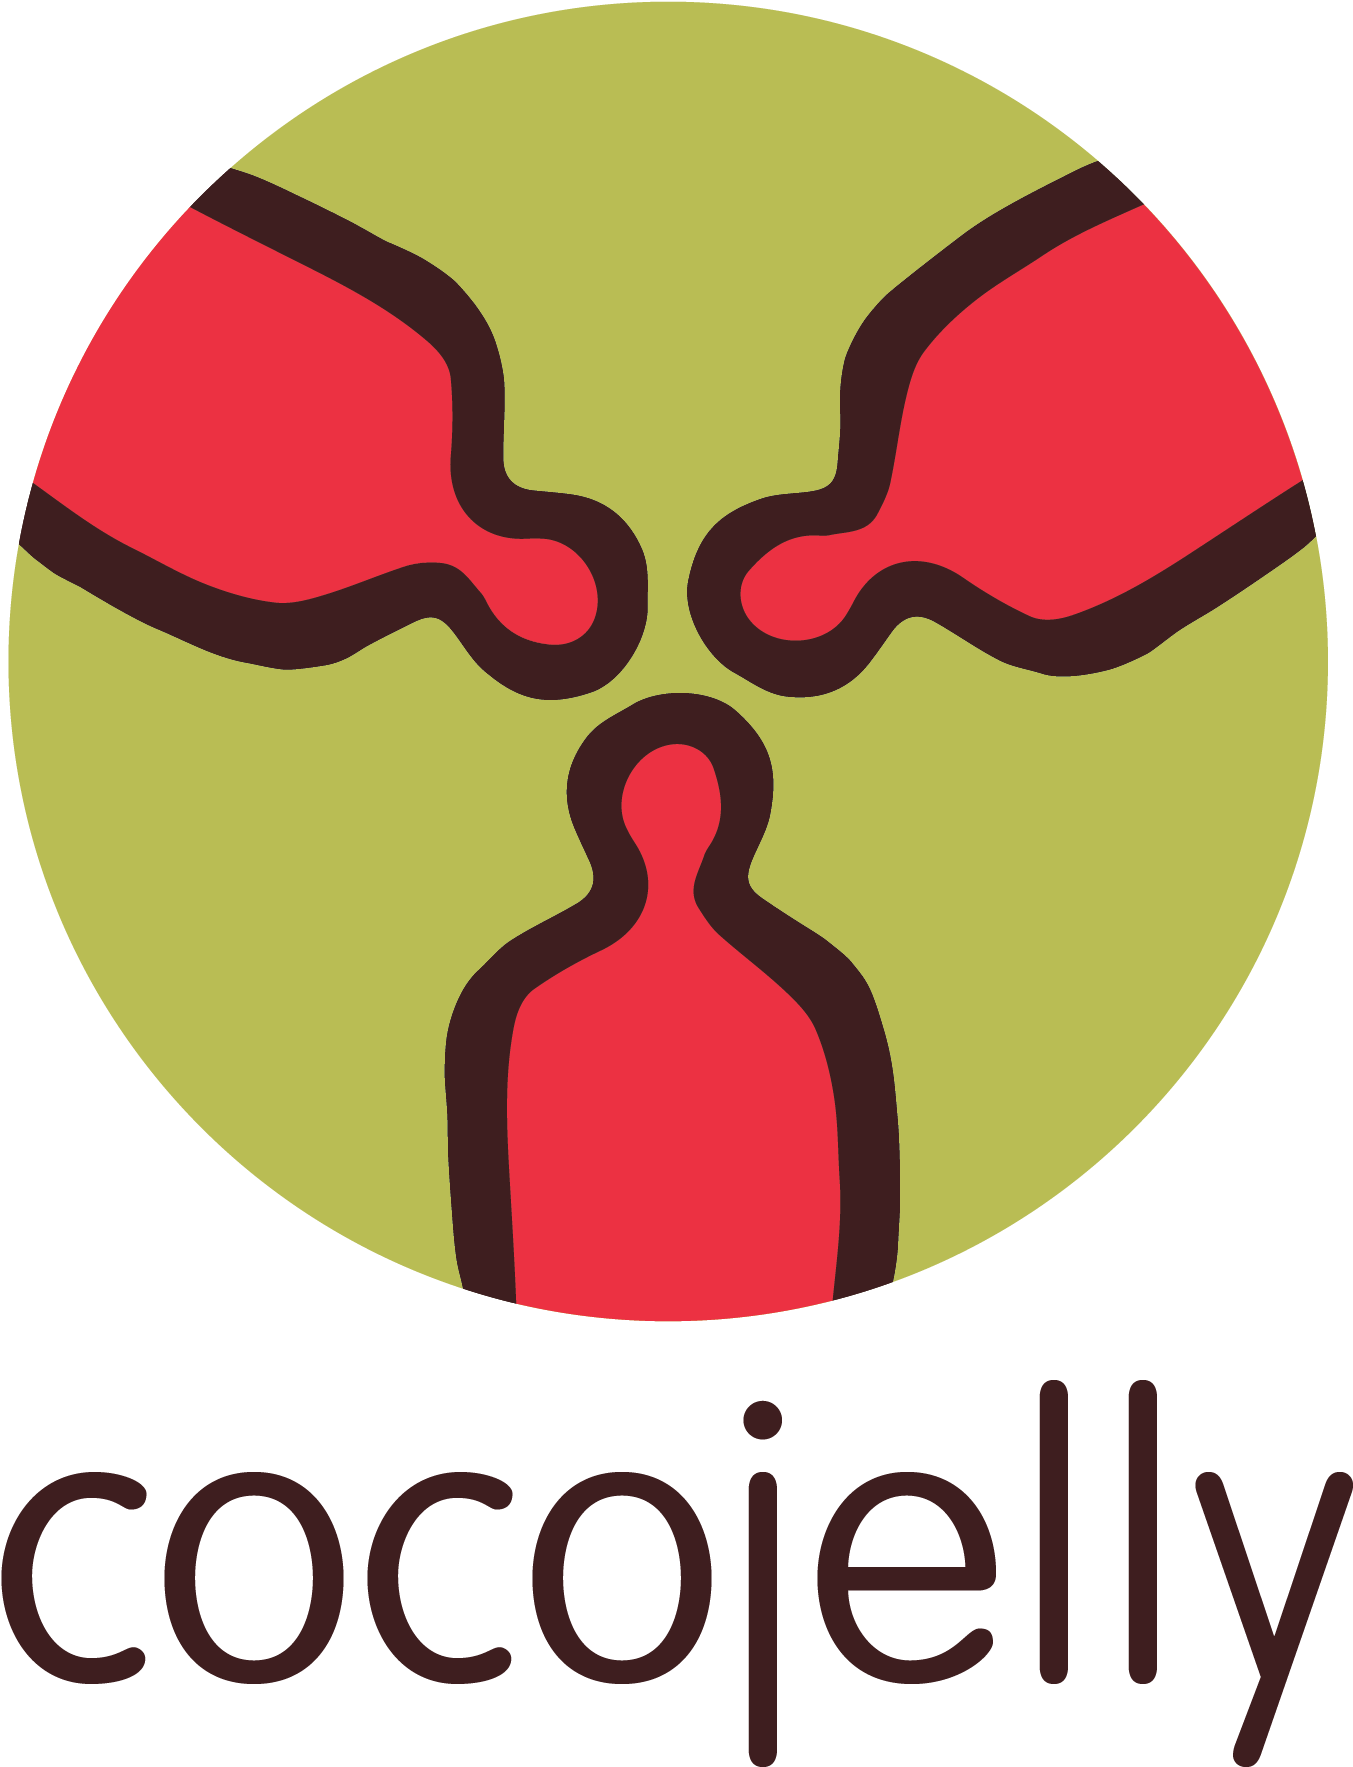 Cocojelly Logo Design By Shane Nagle - Design (2537x2569)